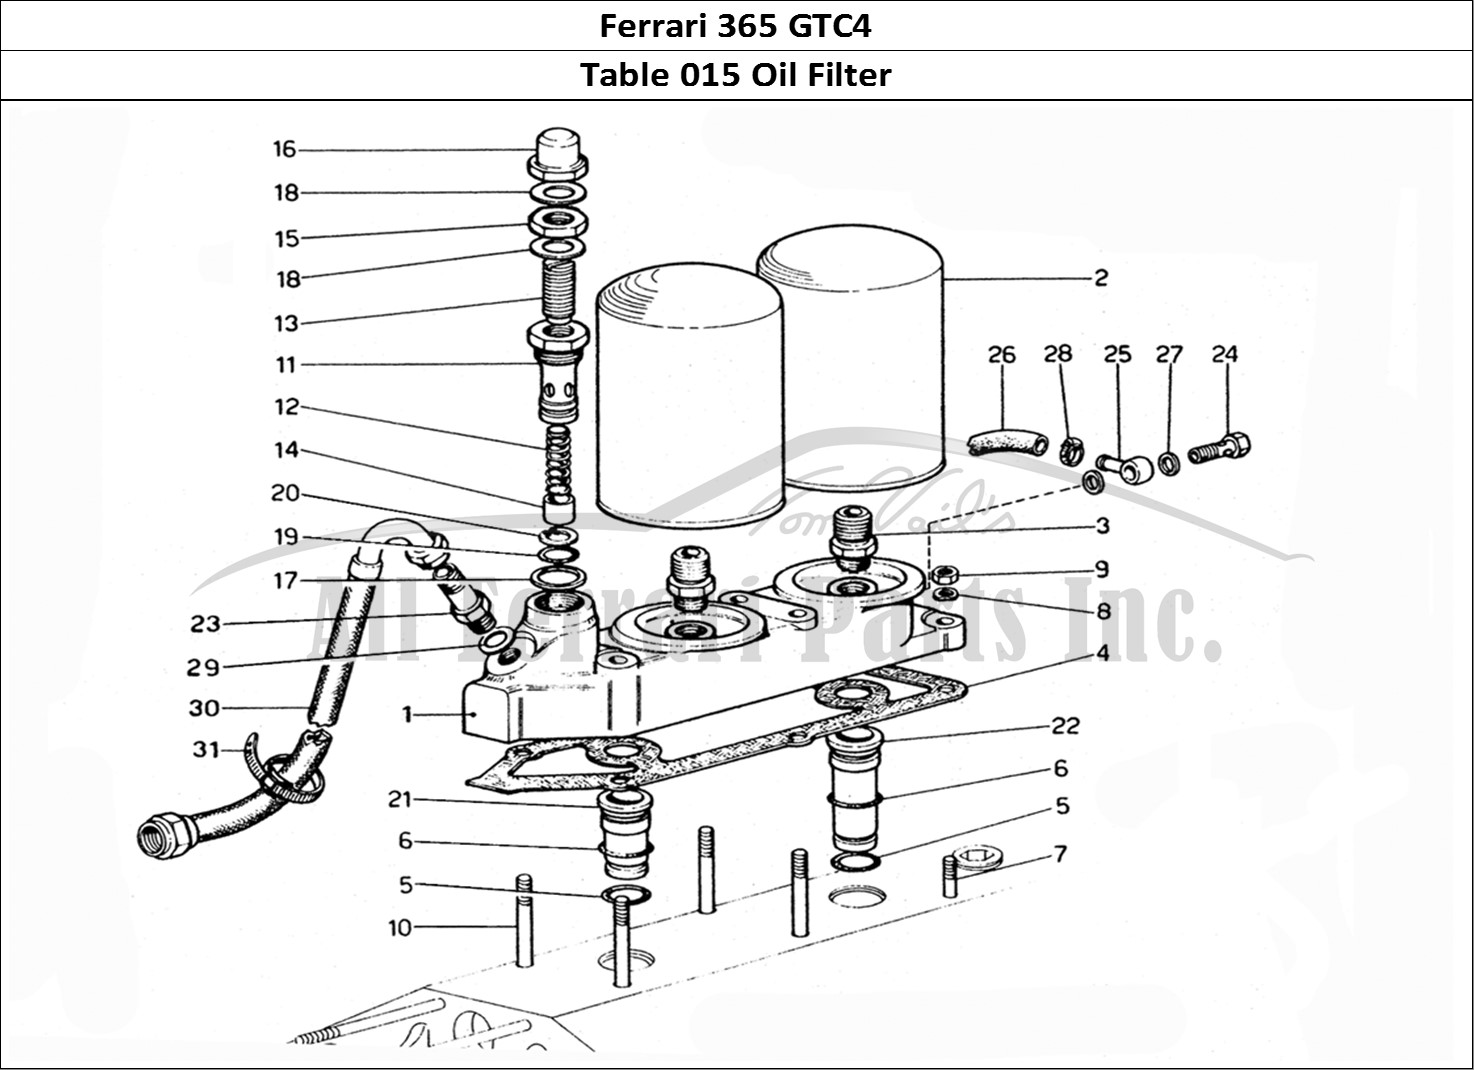 Ferrari Parts Ferrari 365 GTC4 (Mechanical) Page 015 Oil filter